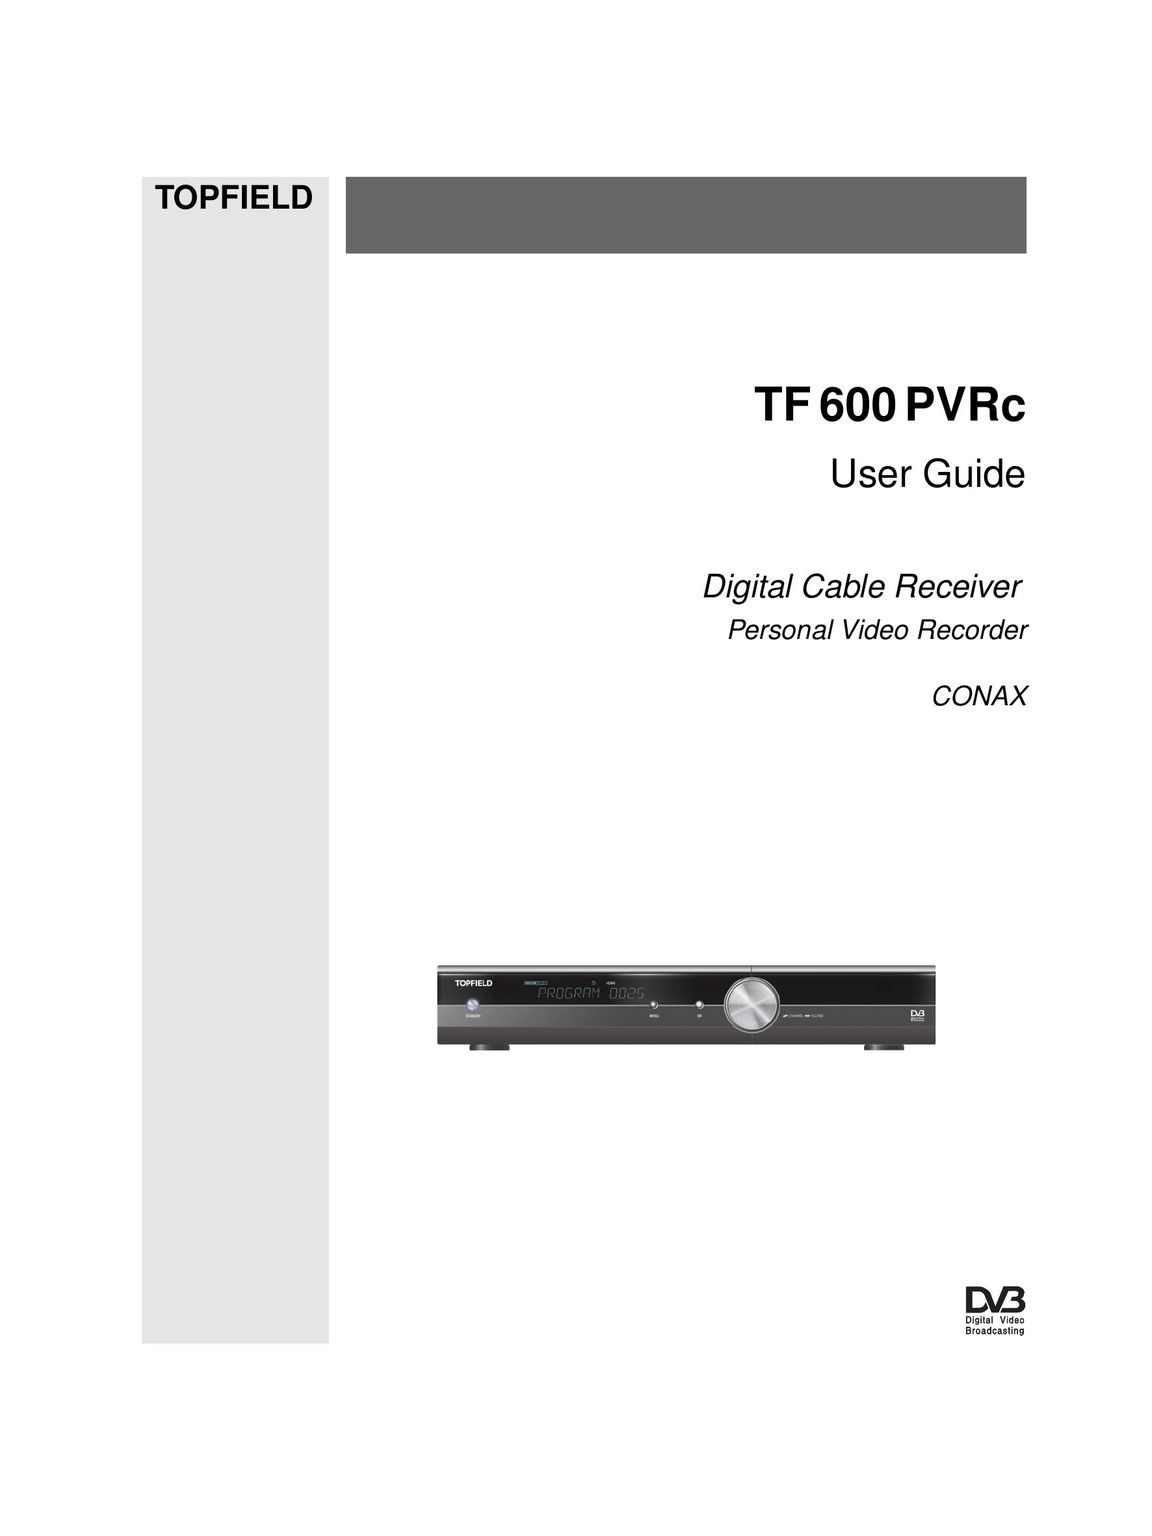 Topfield TF 600 PVRc Cable Box User Manual